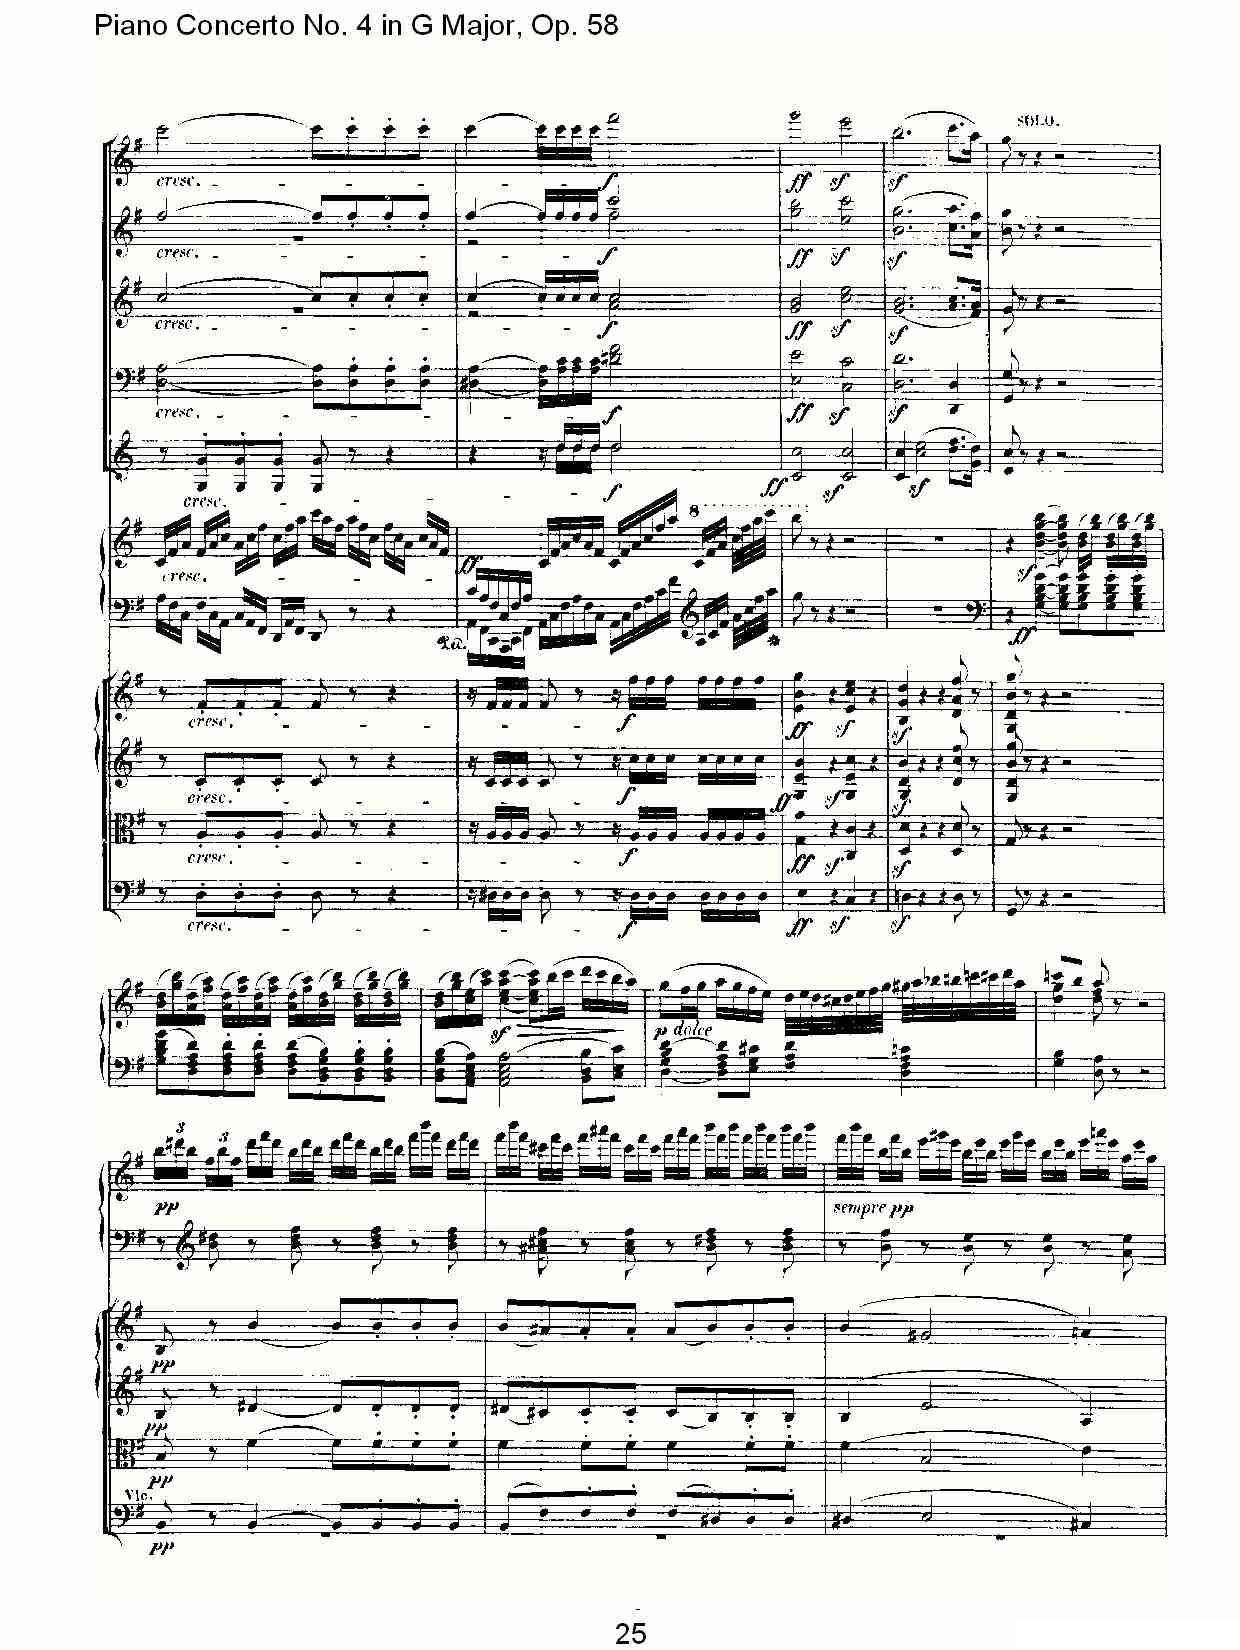 Ｇ大调钢琴第四协奏曲 Op.58 第一乐章钢琴曲谱（图25）